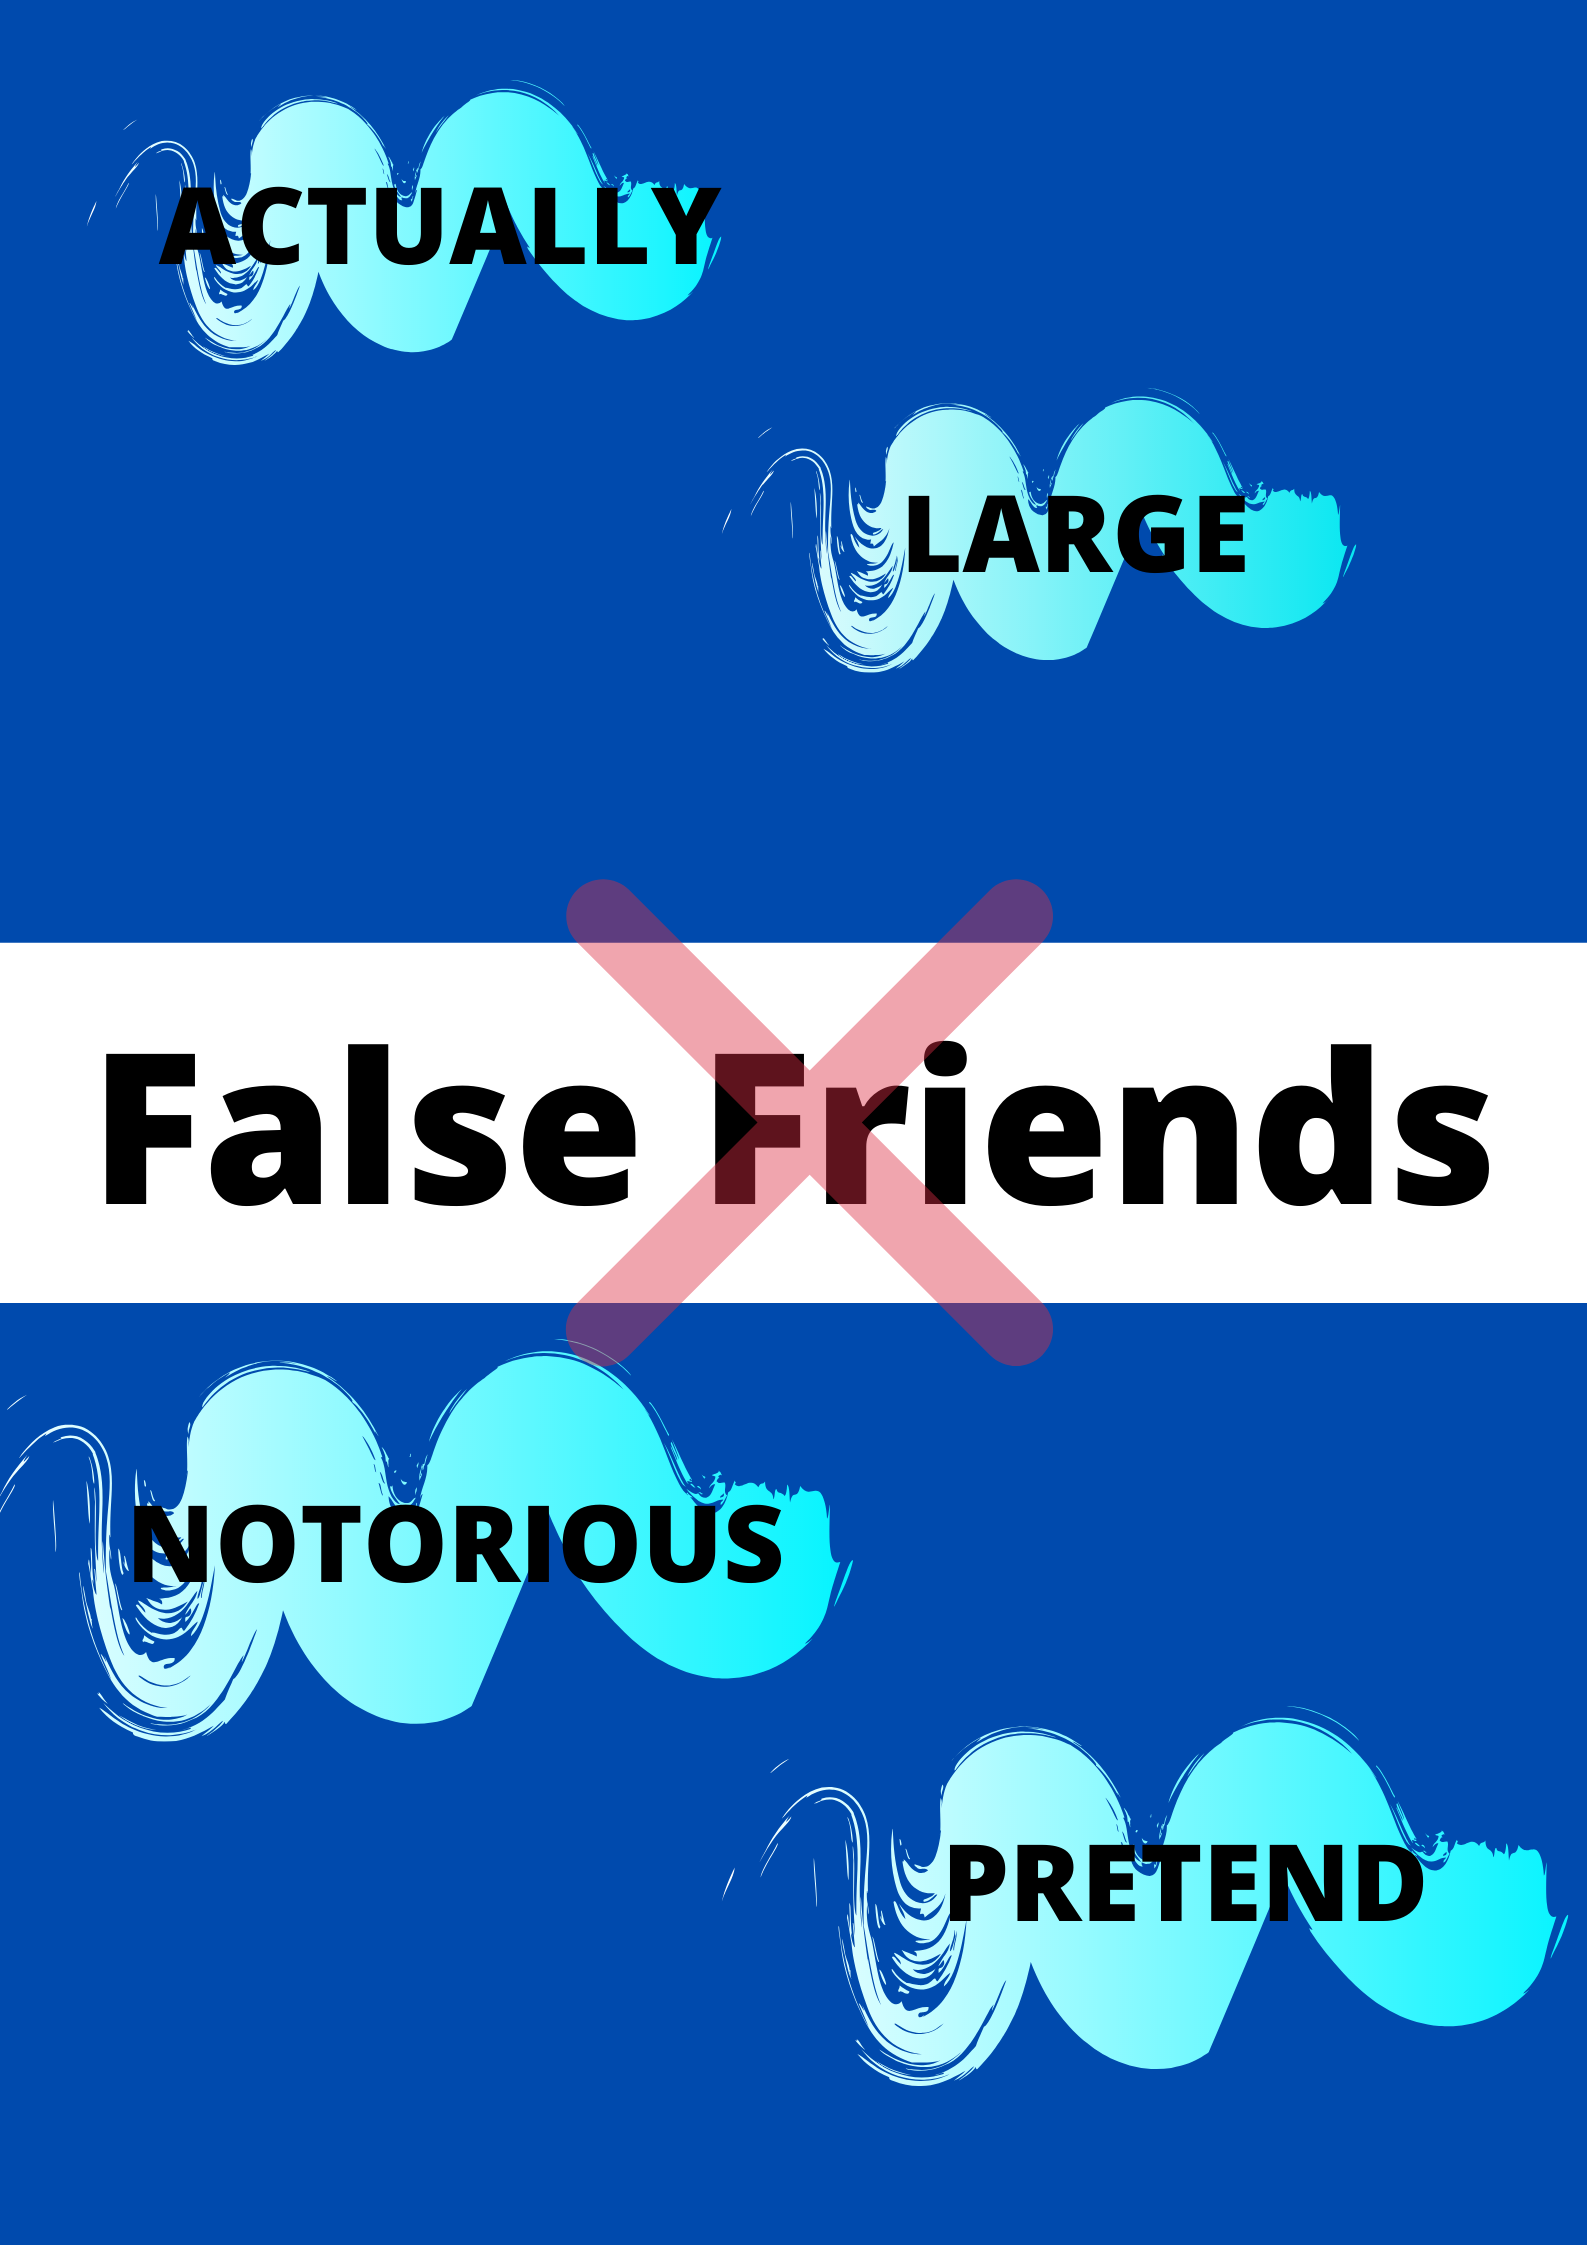 seis-False-friends-que-debes-conocer-en-tu-formación